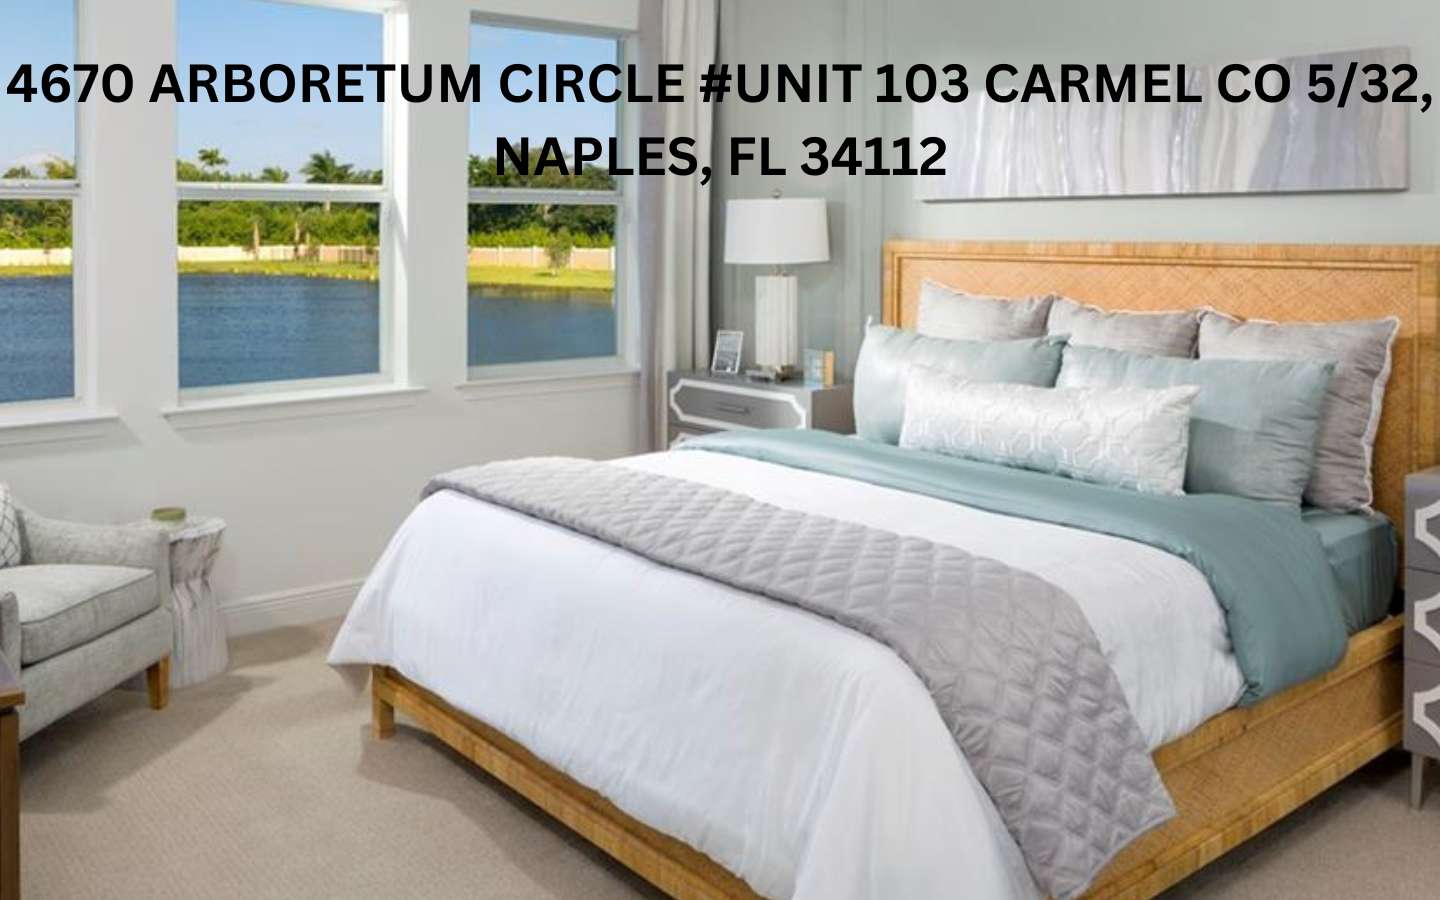 4670 ARBORETUM CIRCLE #UNIT 103 CARMEL CO 5/32, NAPLES, FL 34112